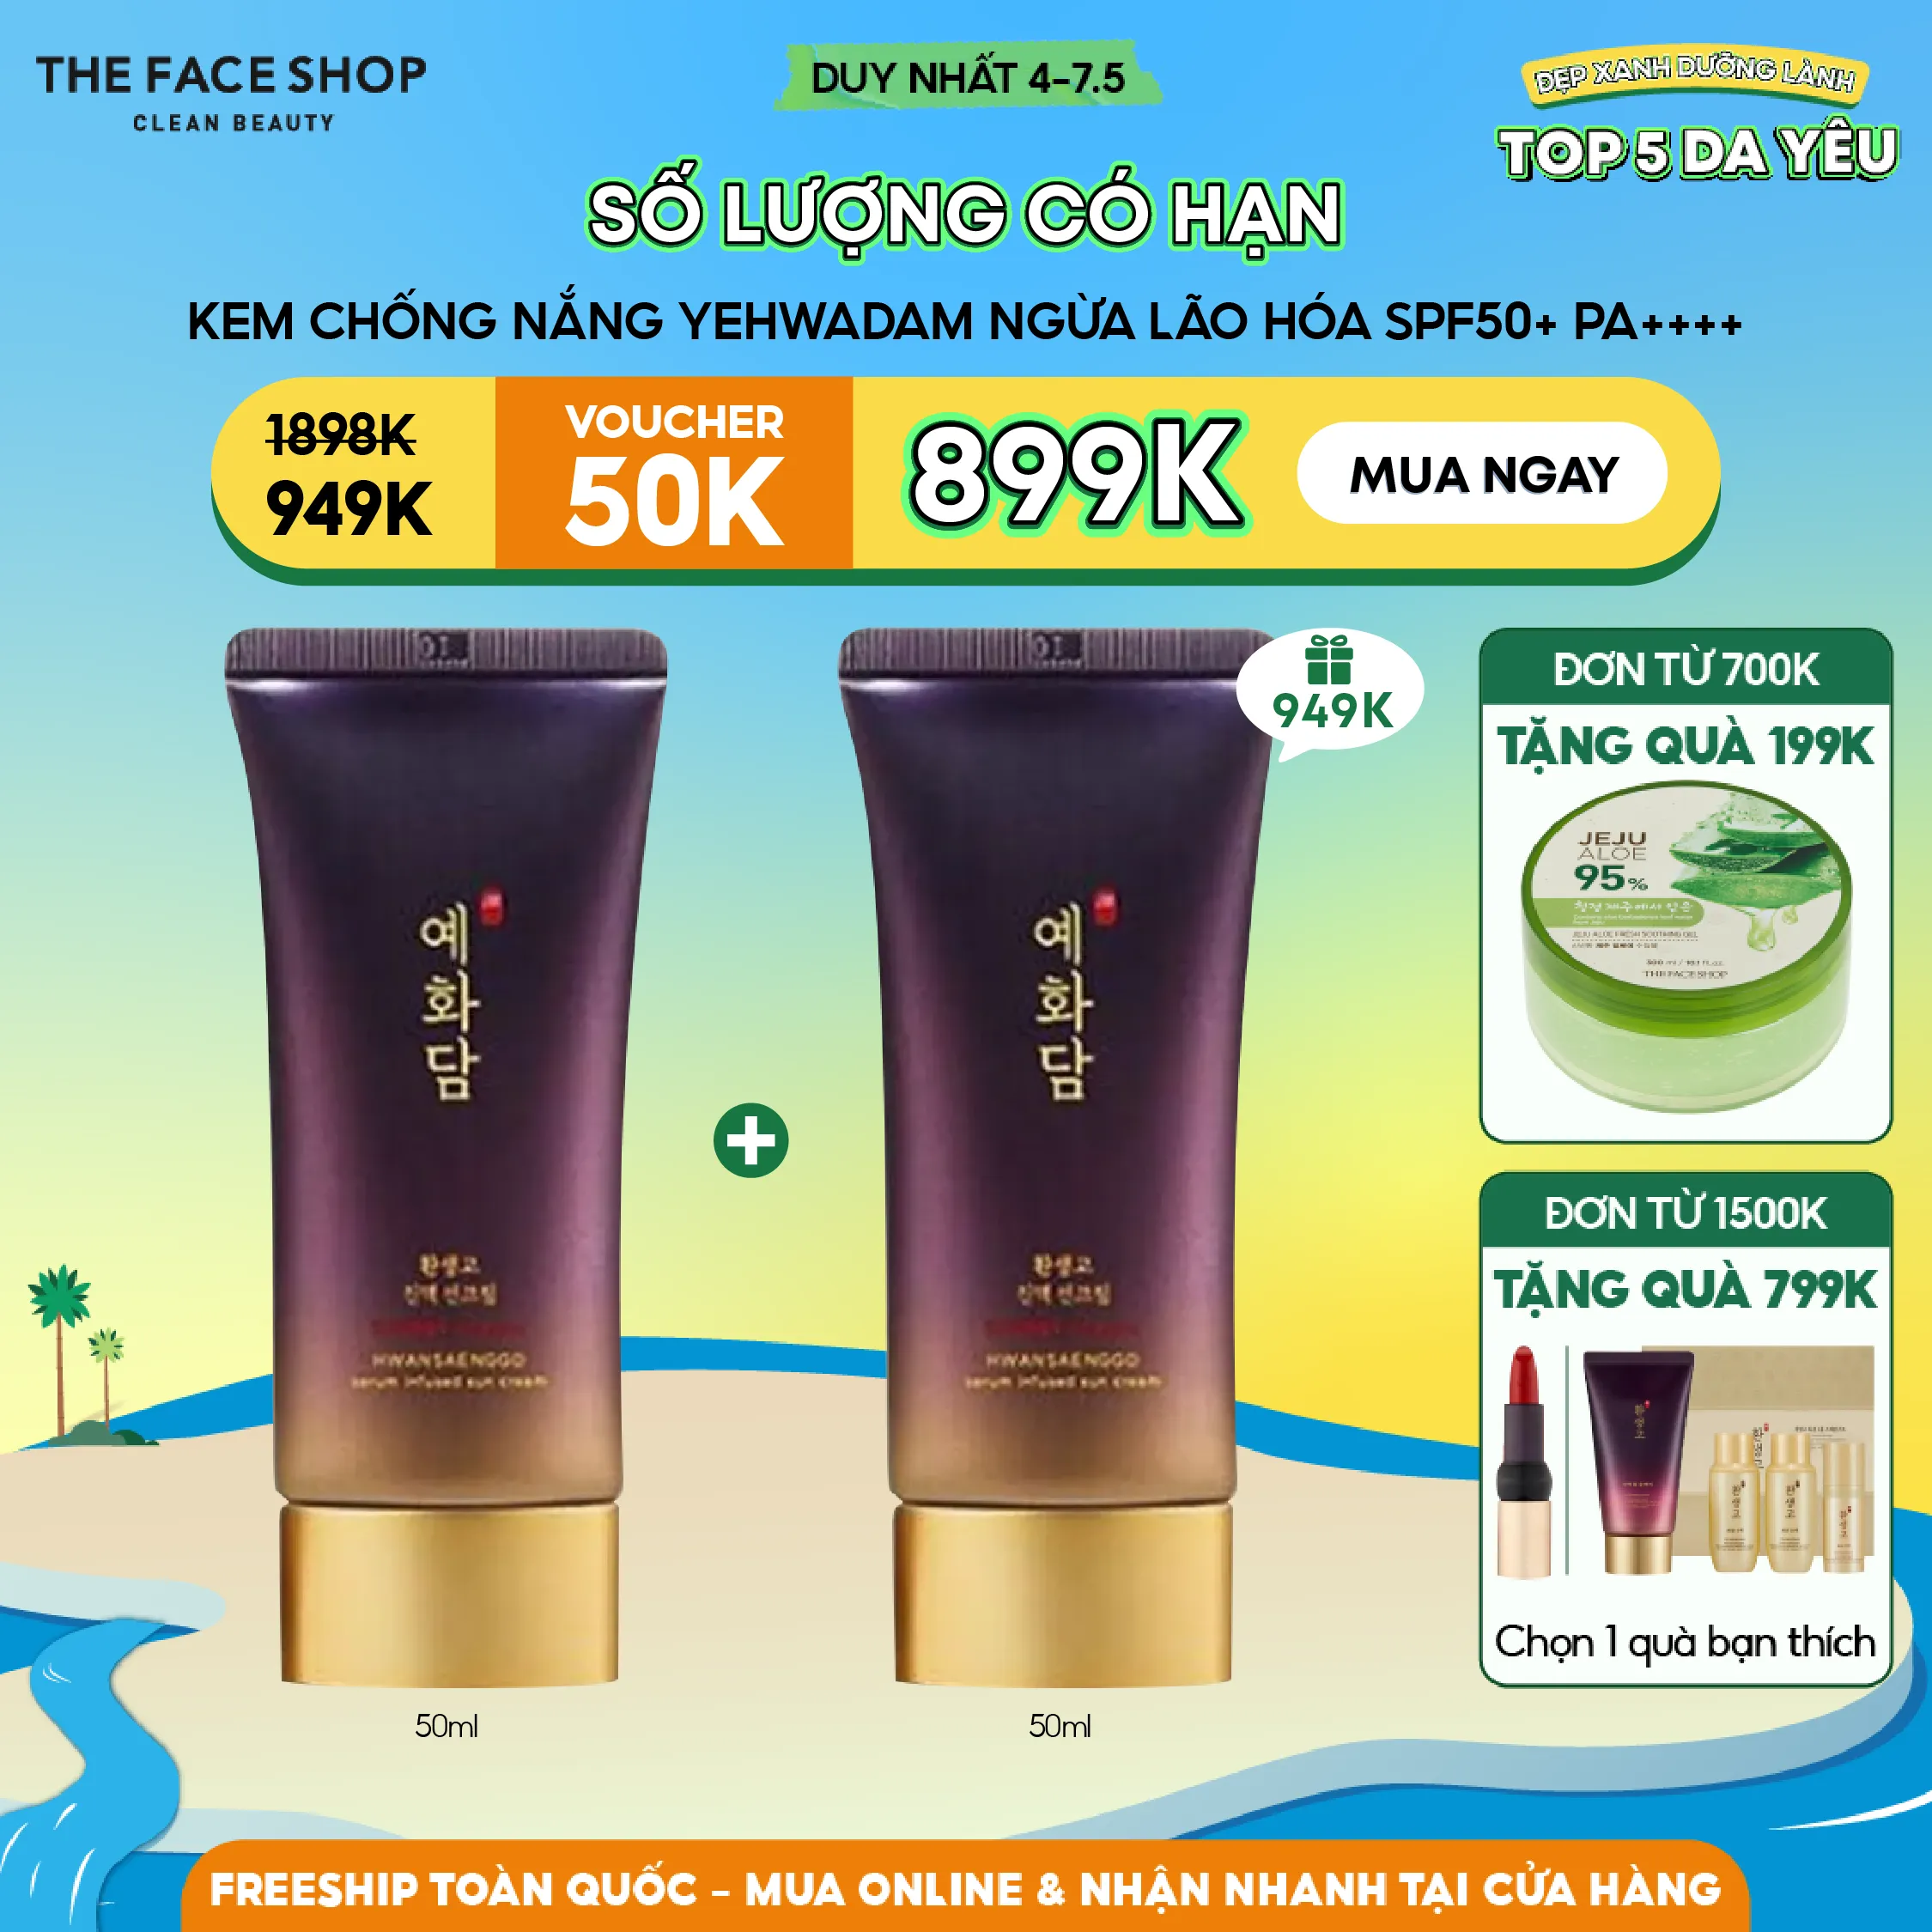 https://thefaceshop.com.vn/products/fmgt-son-tint-hieu-ung-bong-muot-moi-the-face-shop-lip-glaze-5g